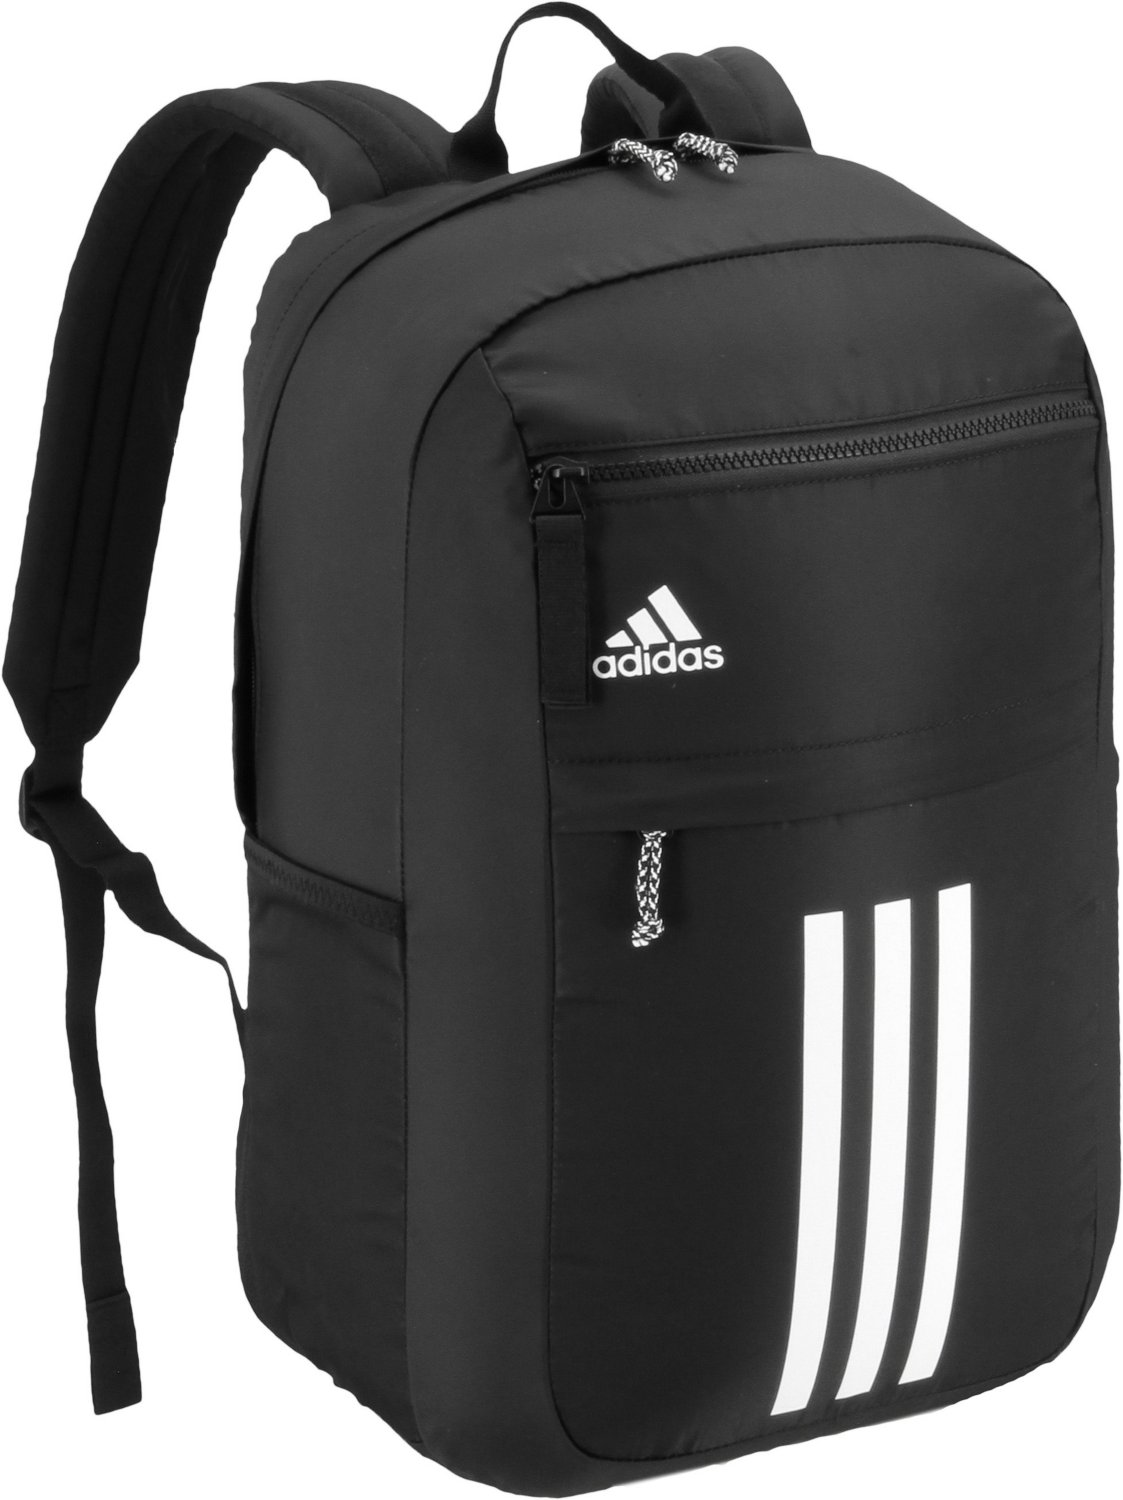 adidas backpack academy